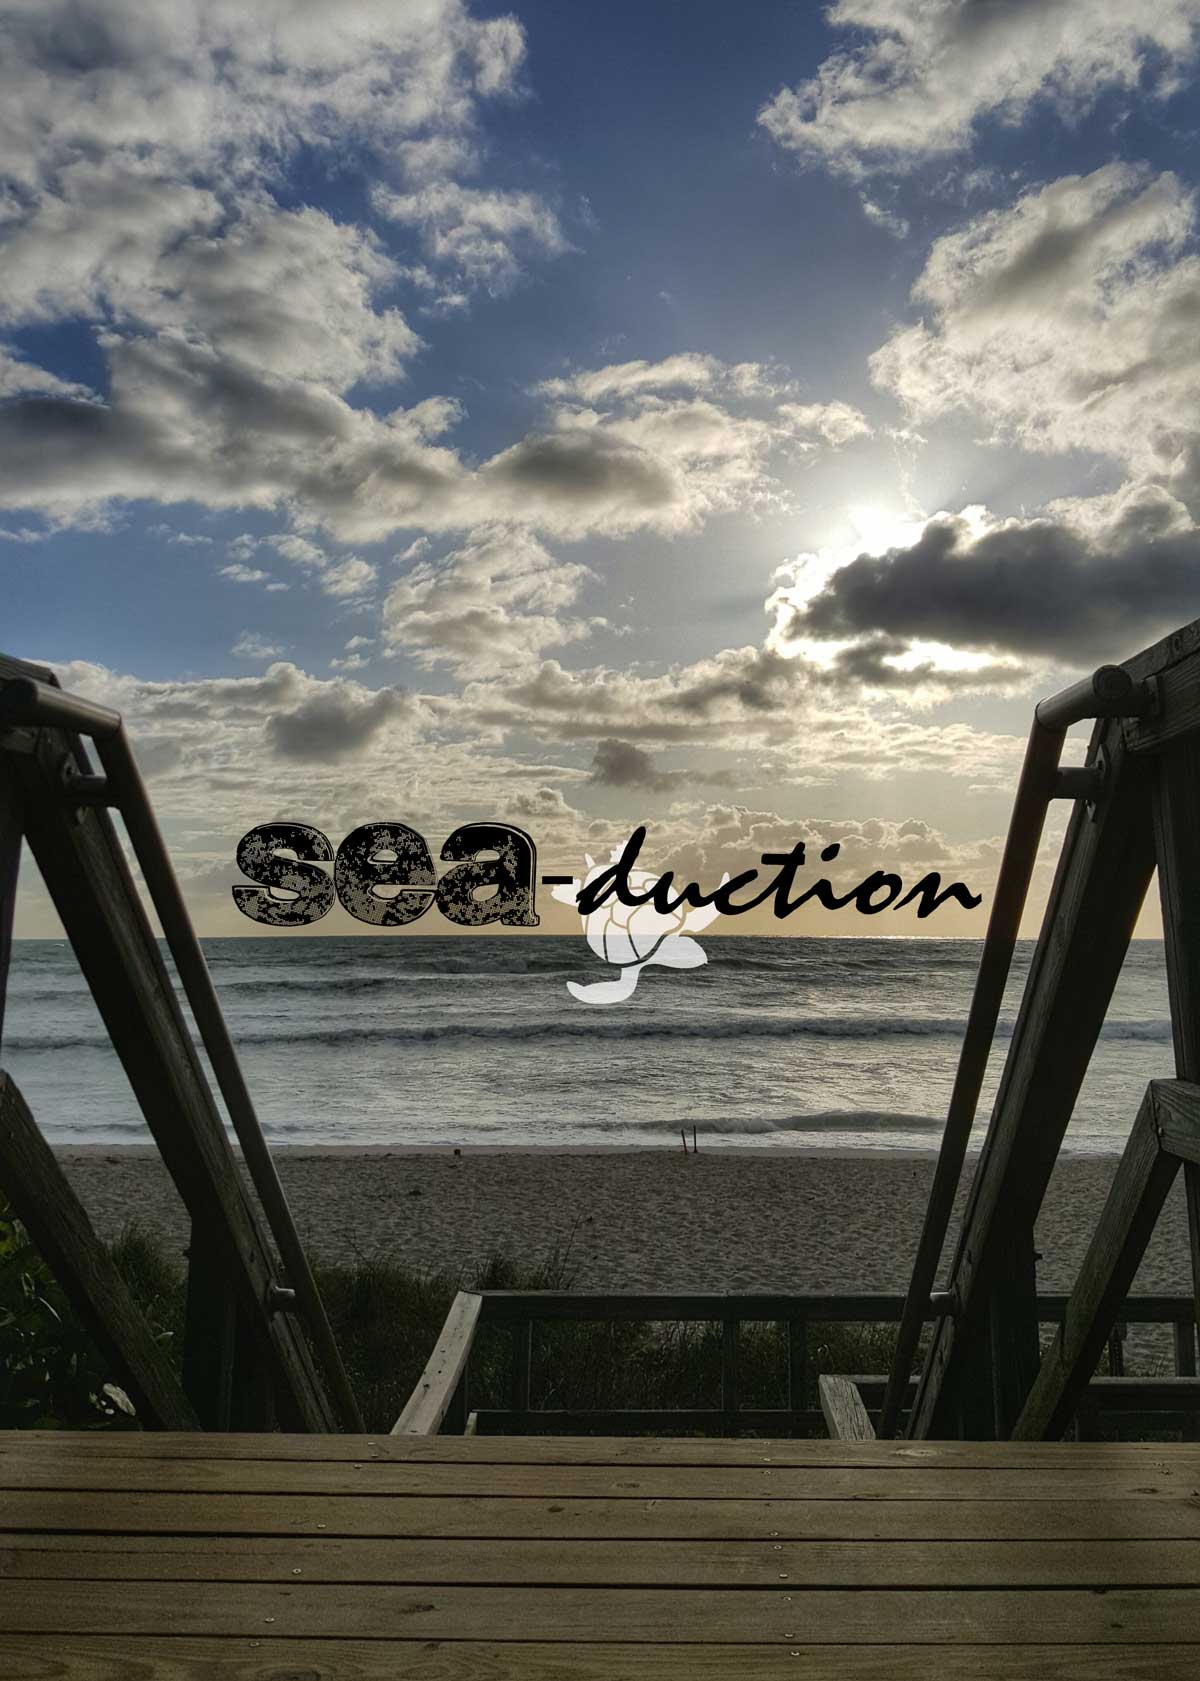 sea-duction